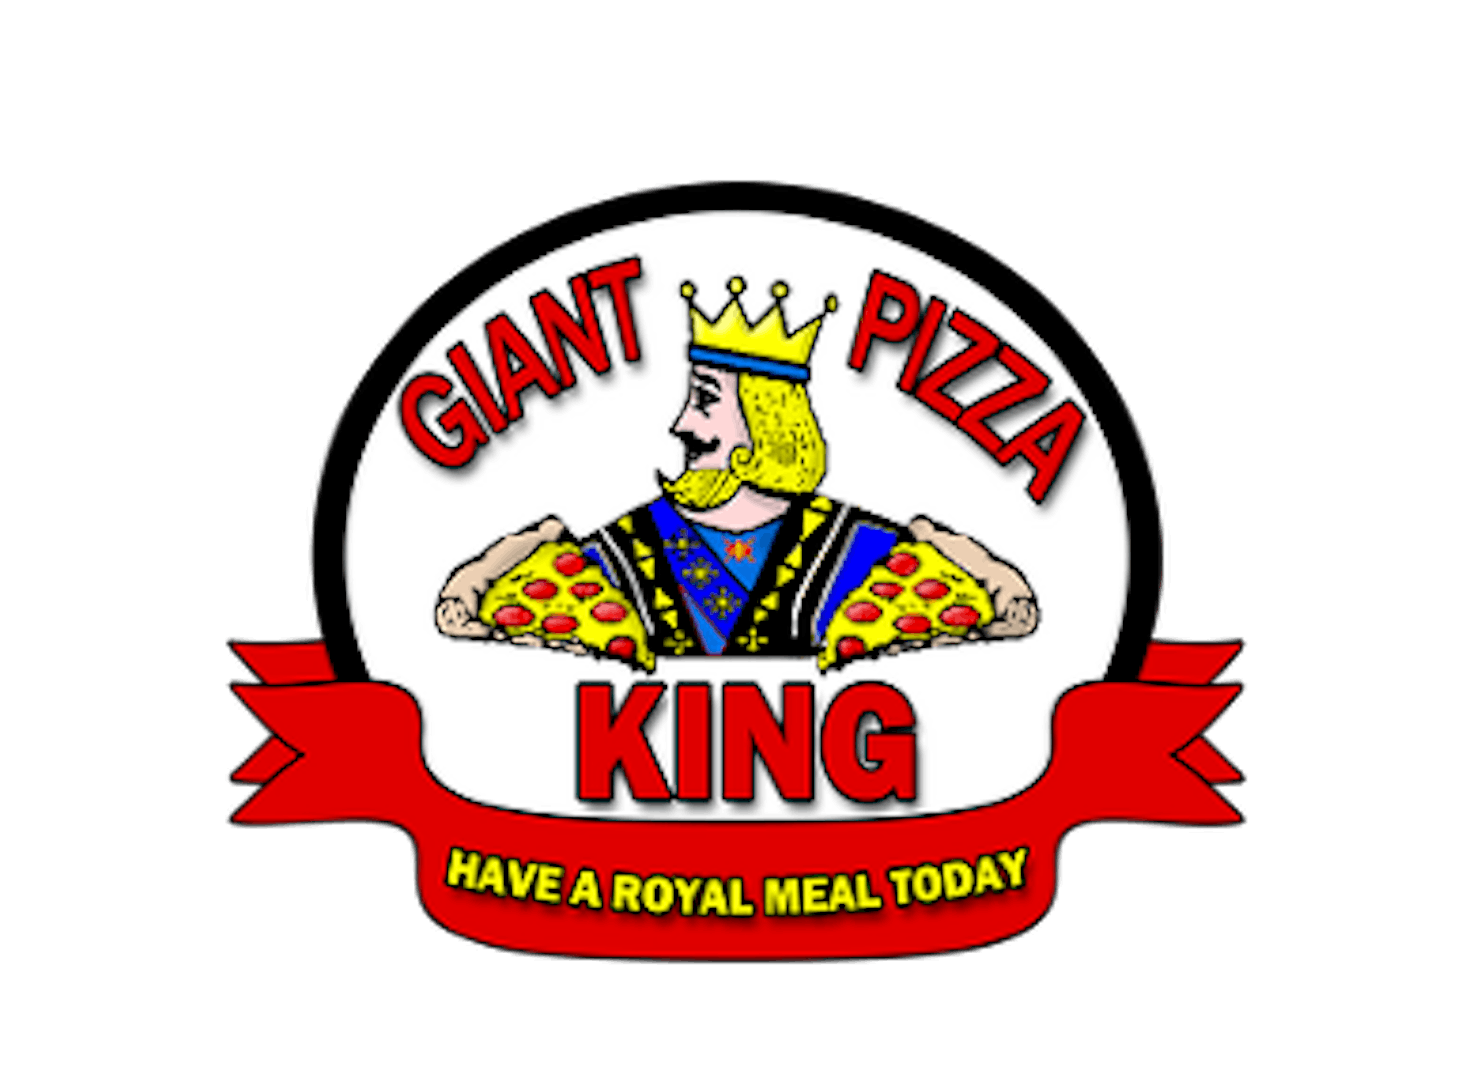 PIZZA KING ONLINE jogo online gratuito em